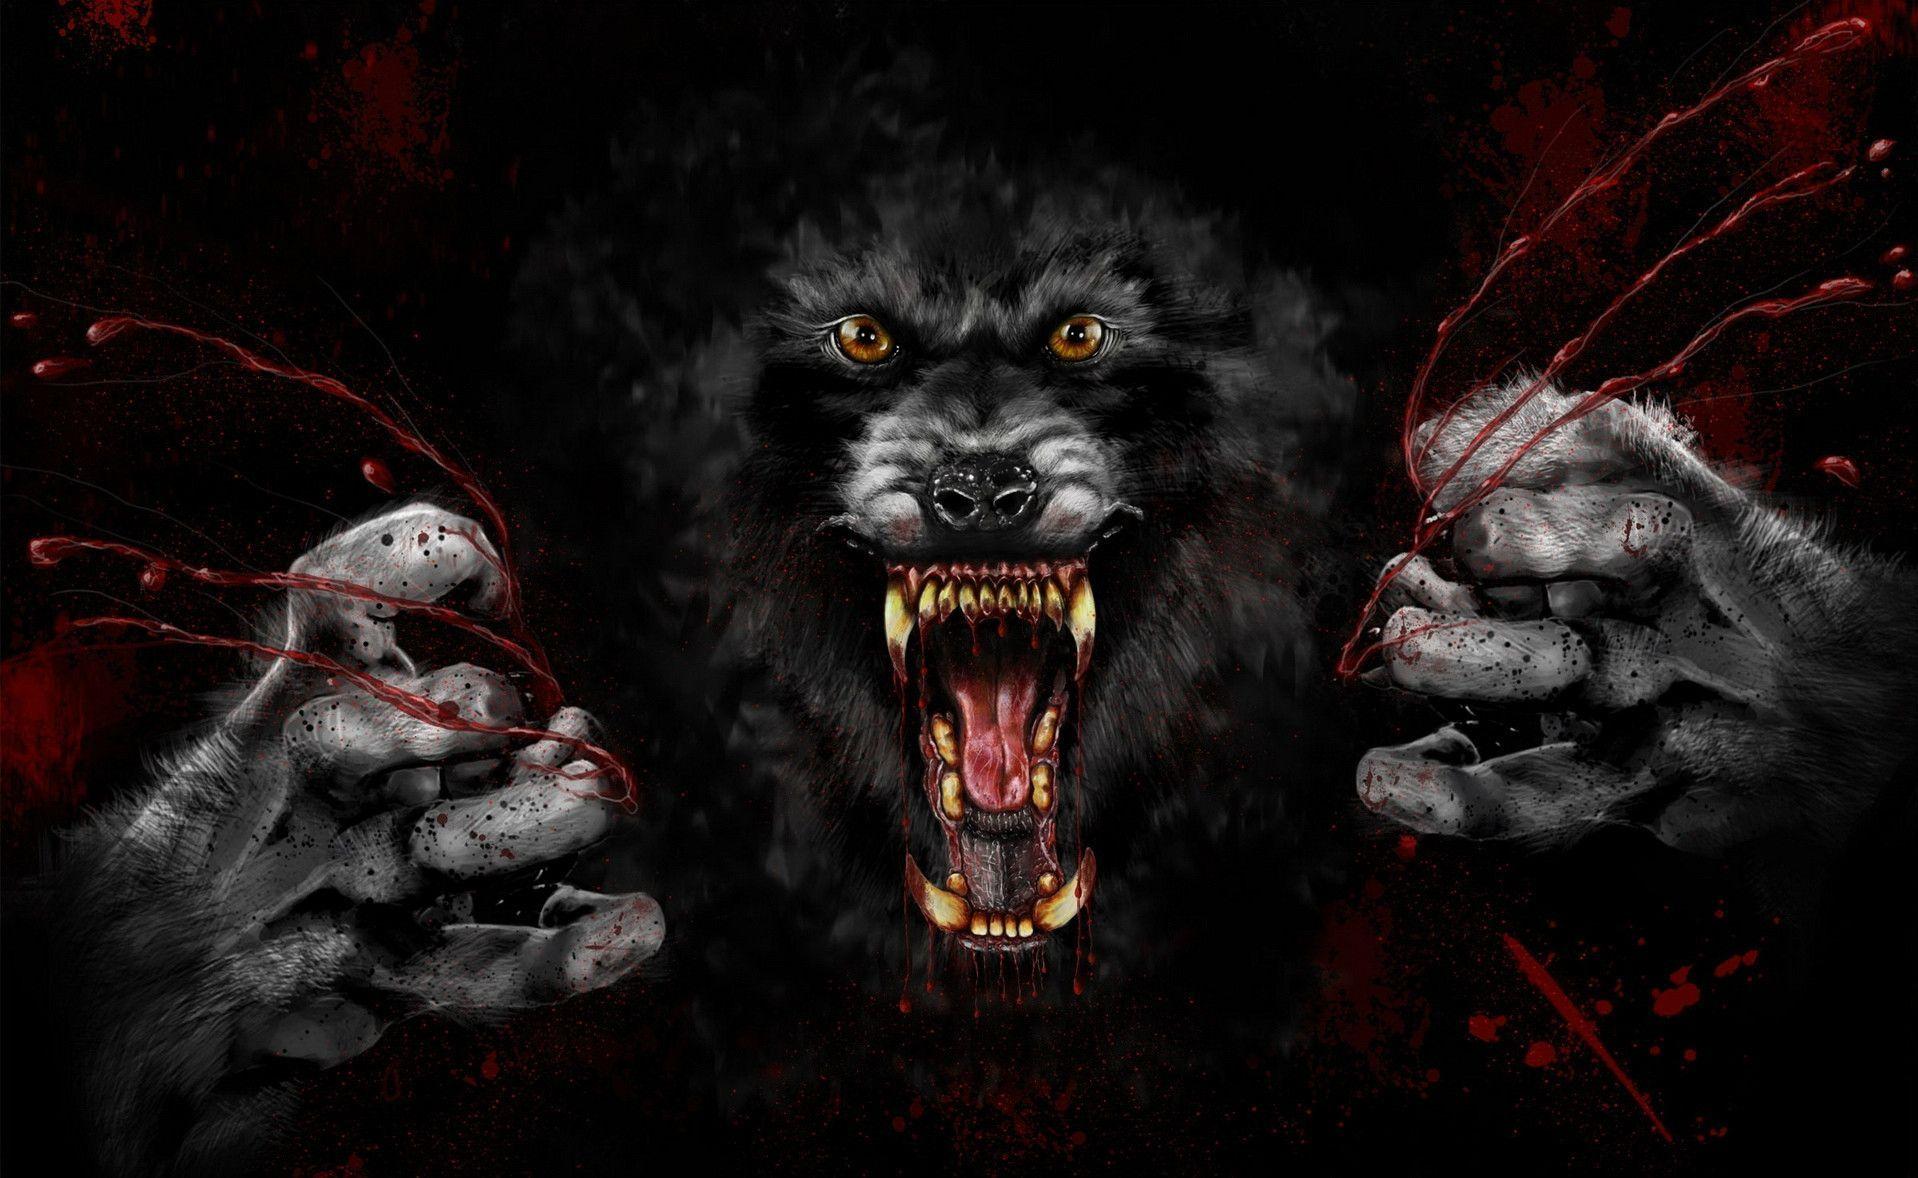 Werewolf Wallpaper High Quality. Werewolf Wallpaper, Background